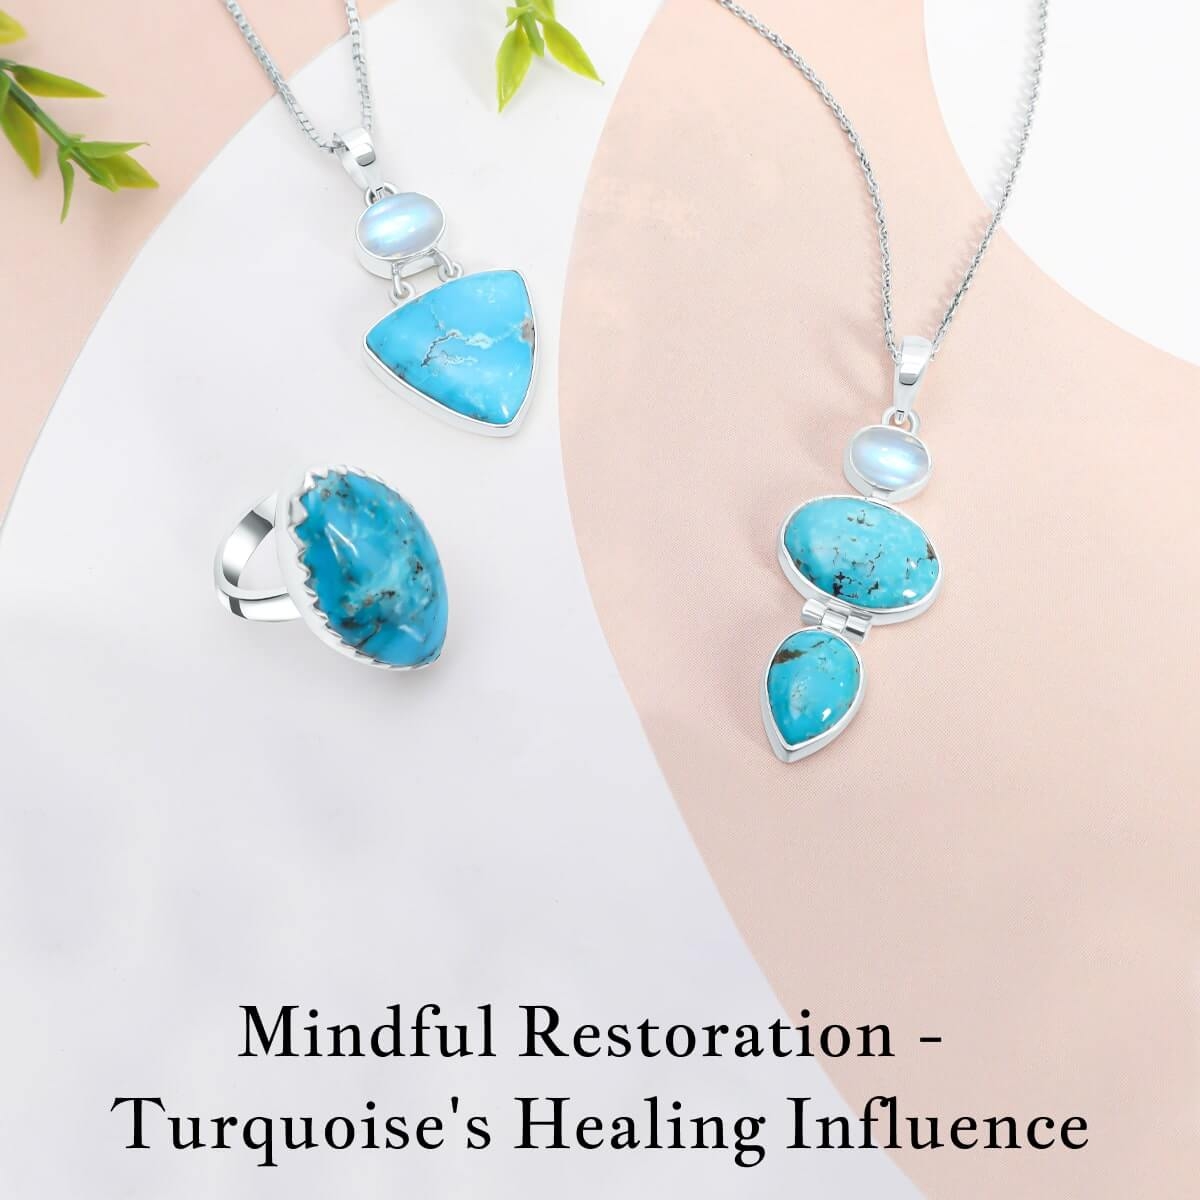 Turquoise Stone Mental Healing Properties